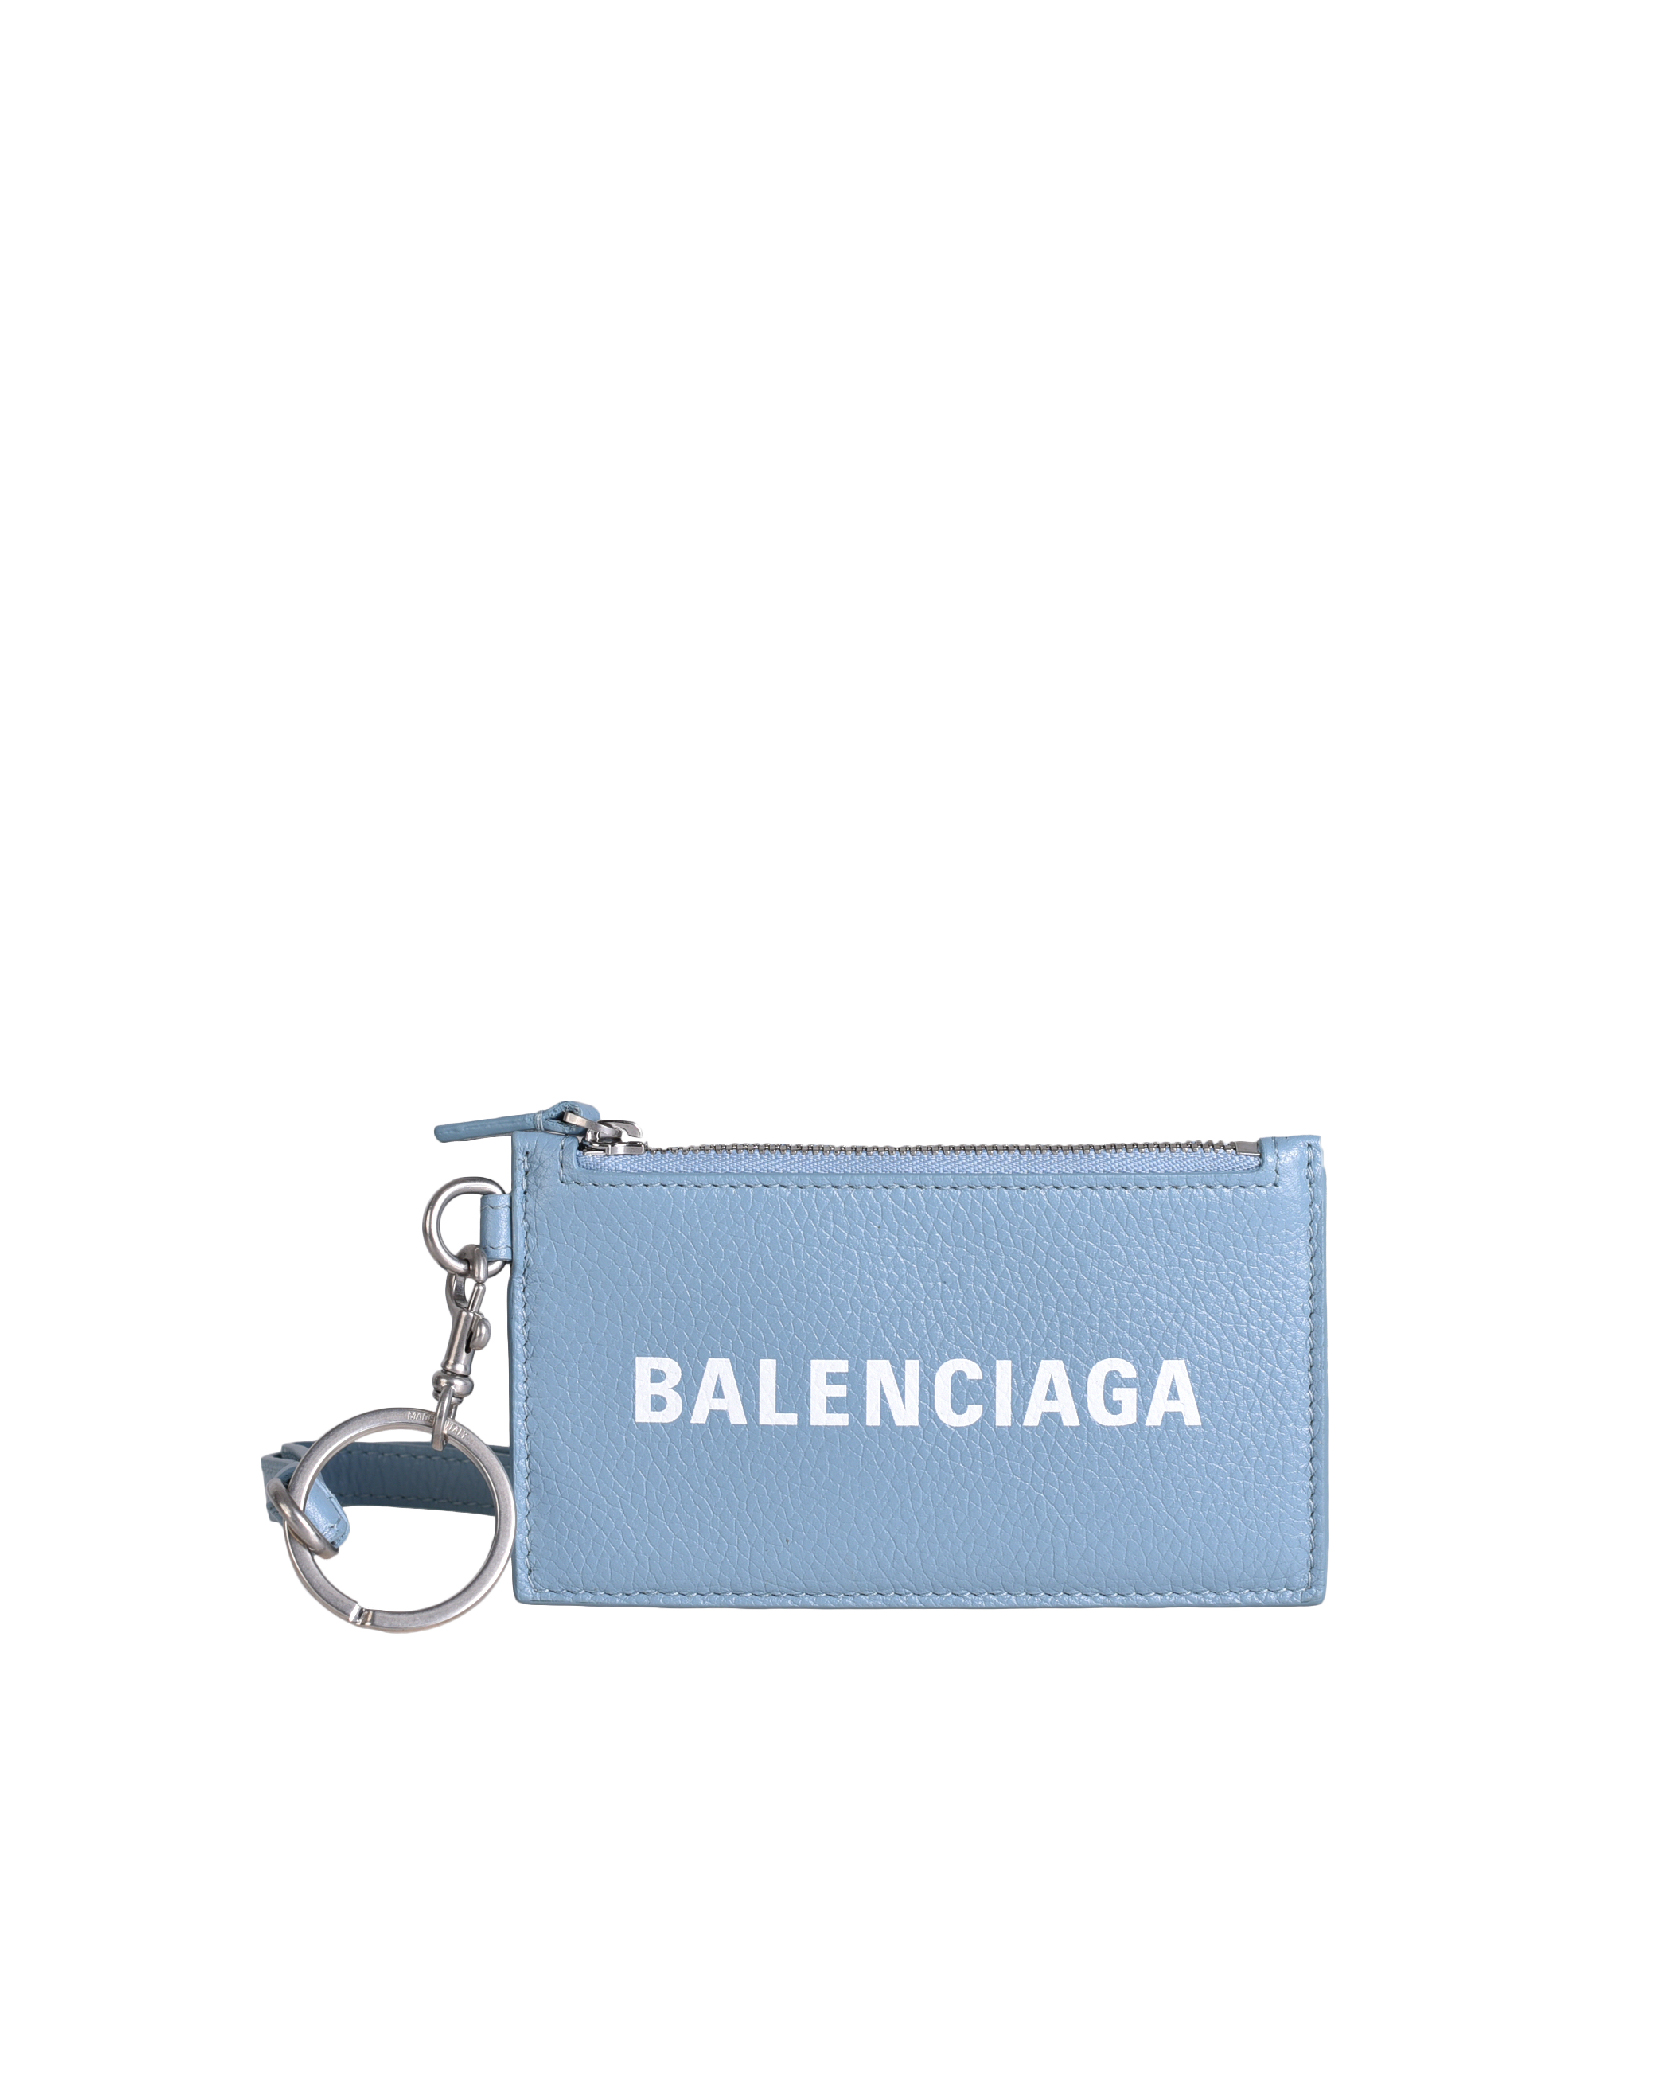 Image 1 of バレンシアガ BALENCIAGA 594548 1IZI3 4791 ライトブルーレザーストラップカードホルダー